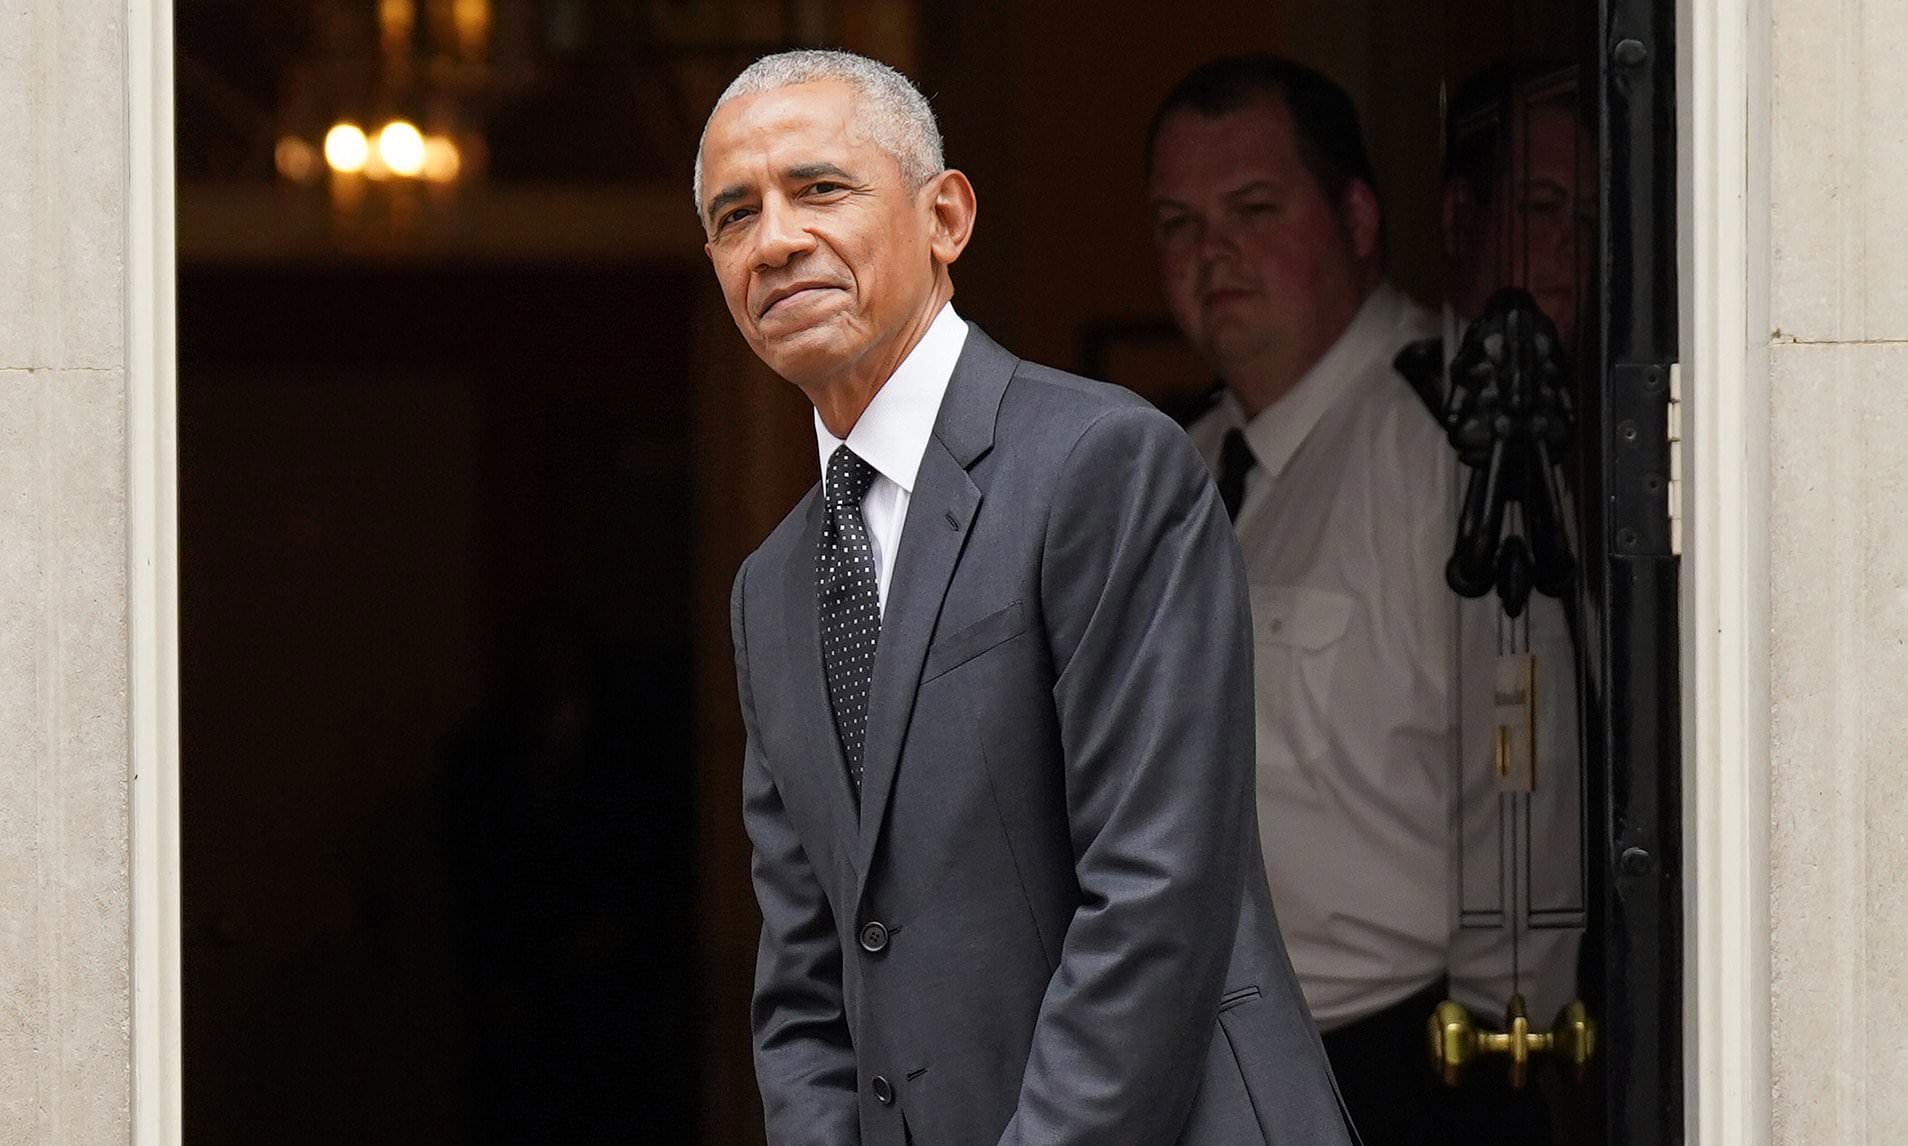 Former President Barack Obama Surprises London with Downing Street Visit